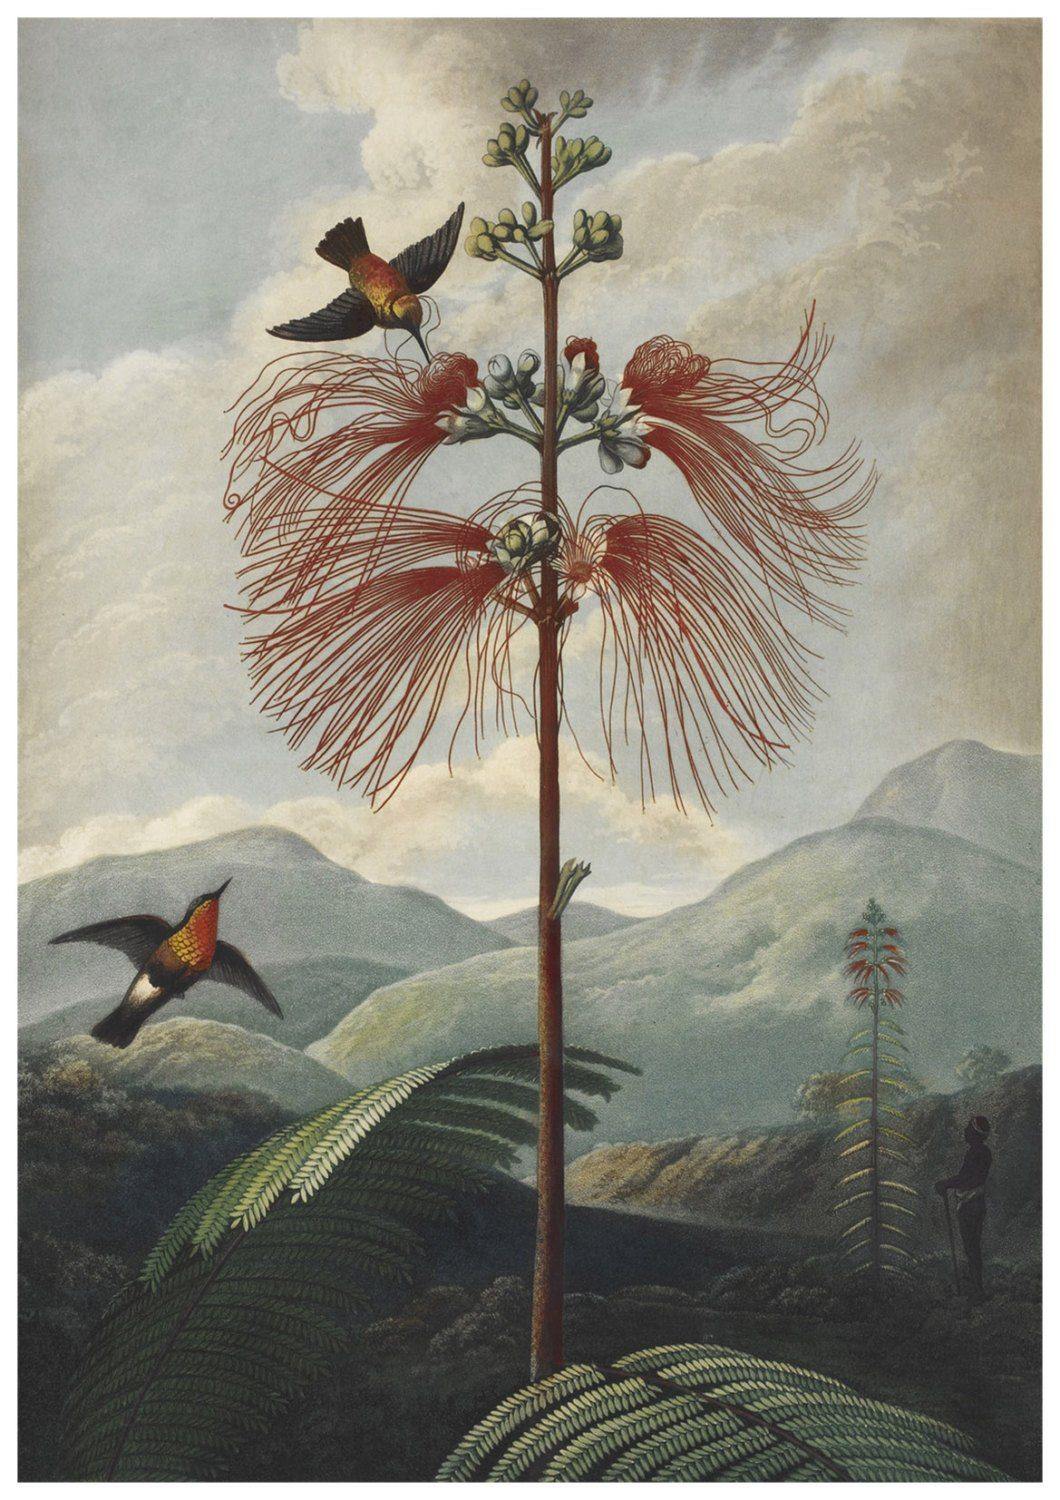 BIRD LANDSCAPE PRINT: Robert Thornton Illustration - Pimlico Prints